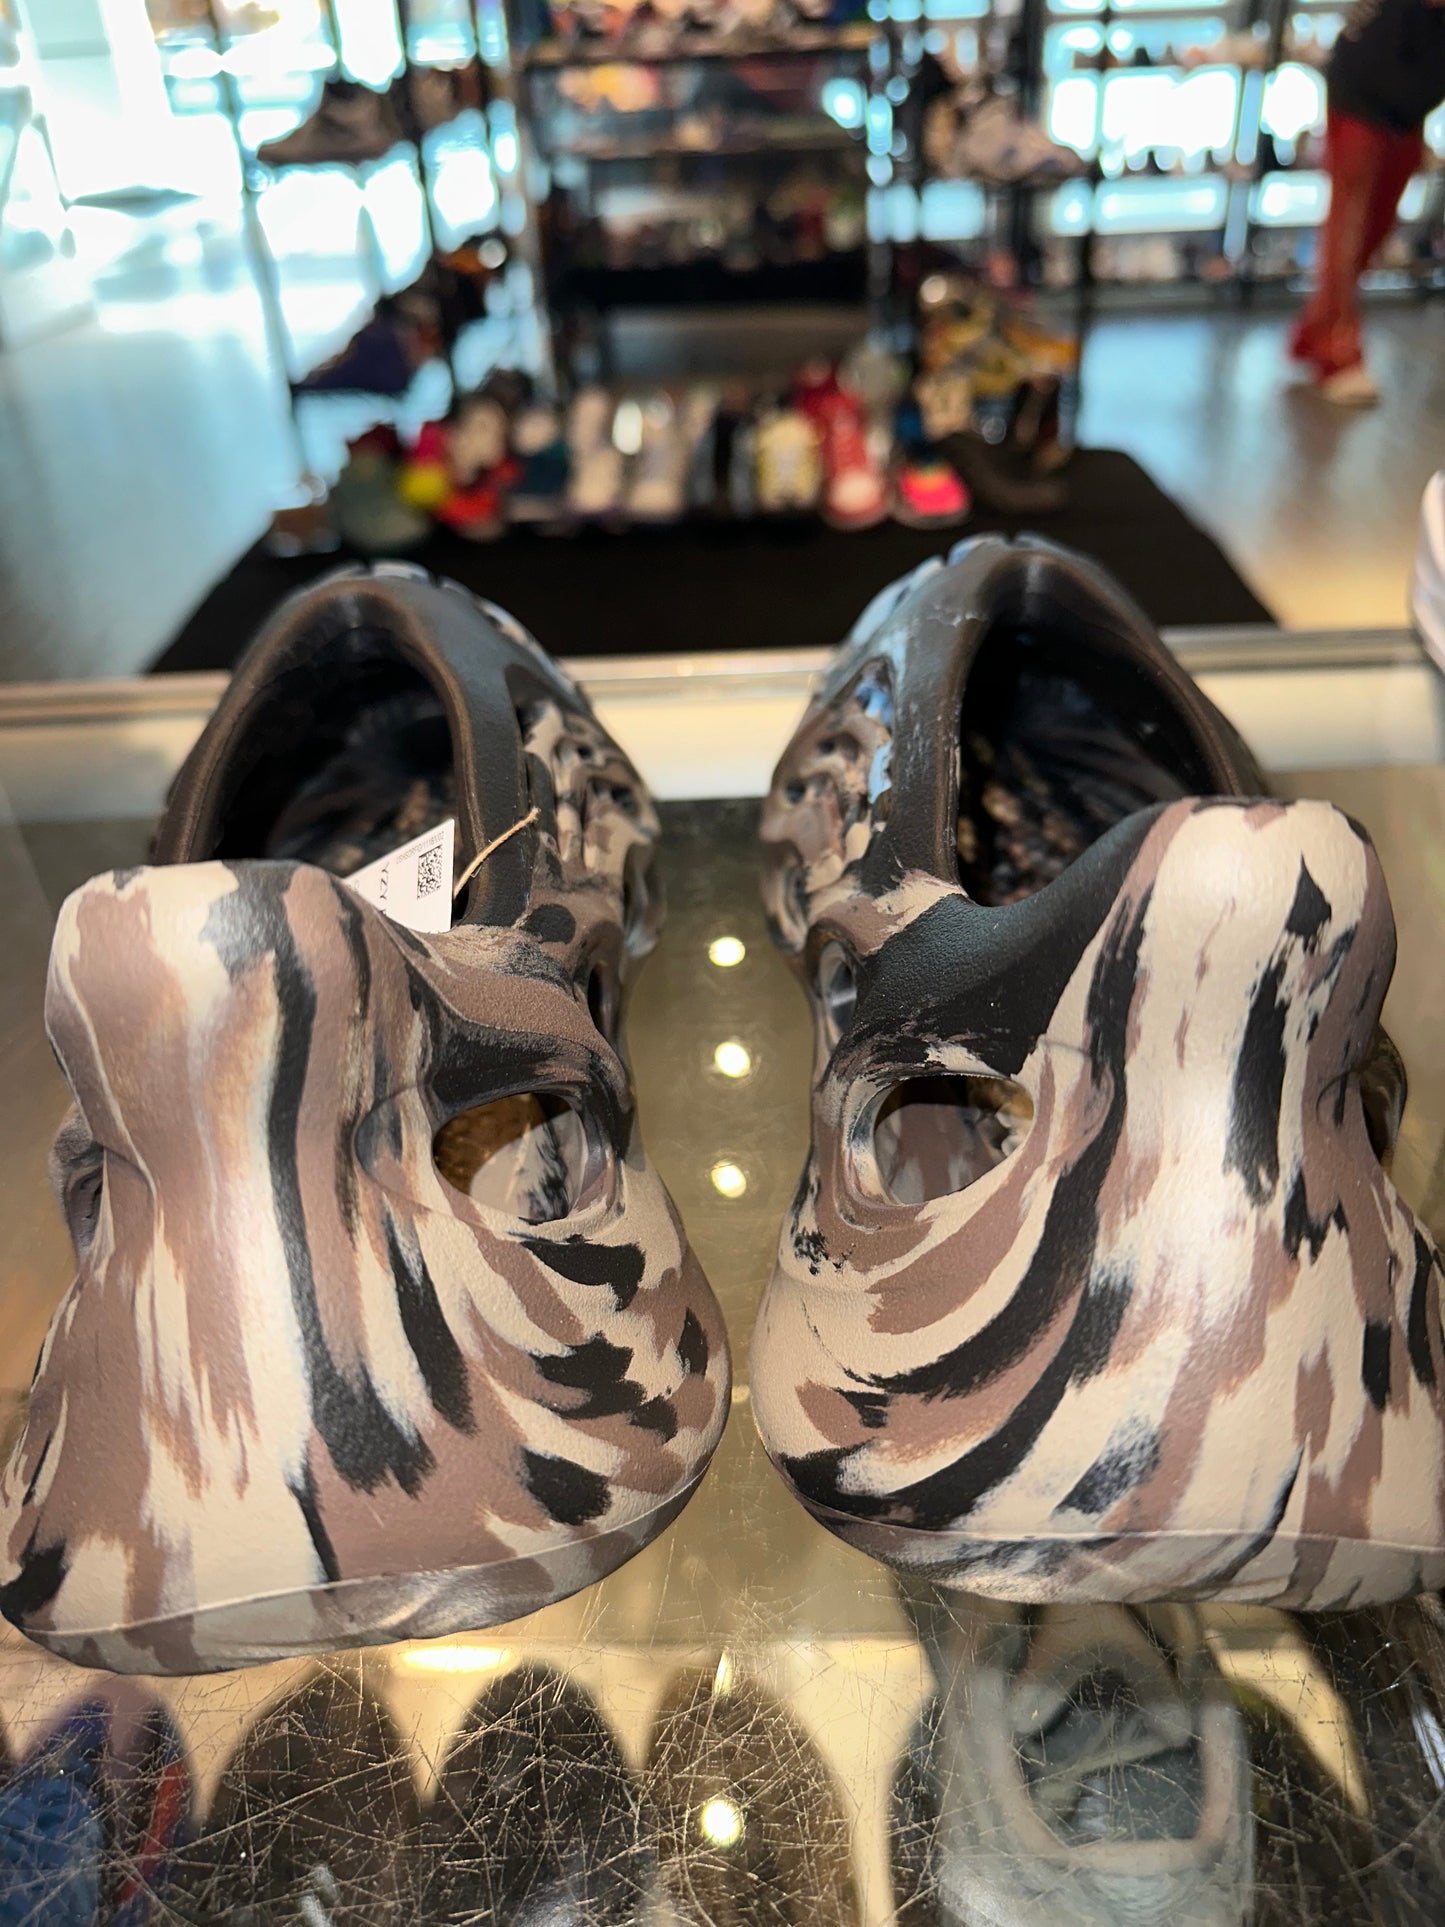 Size 12 Adidas Yeezy Foam Runner “MX Cinder” Brand New (Mall)